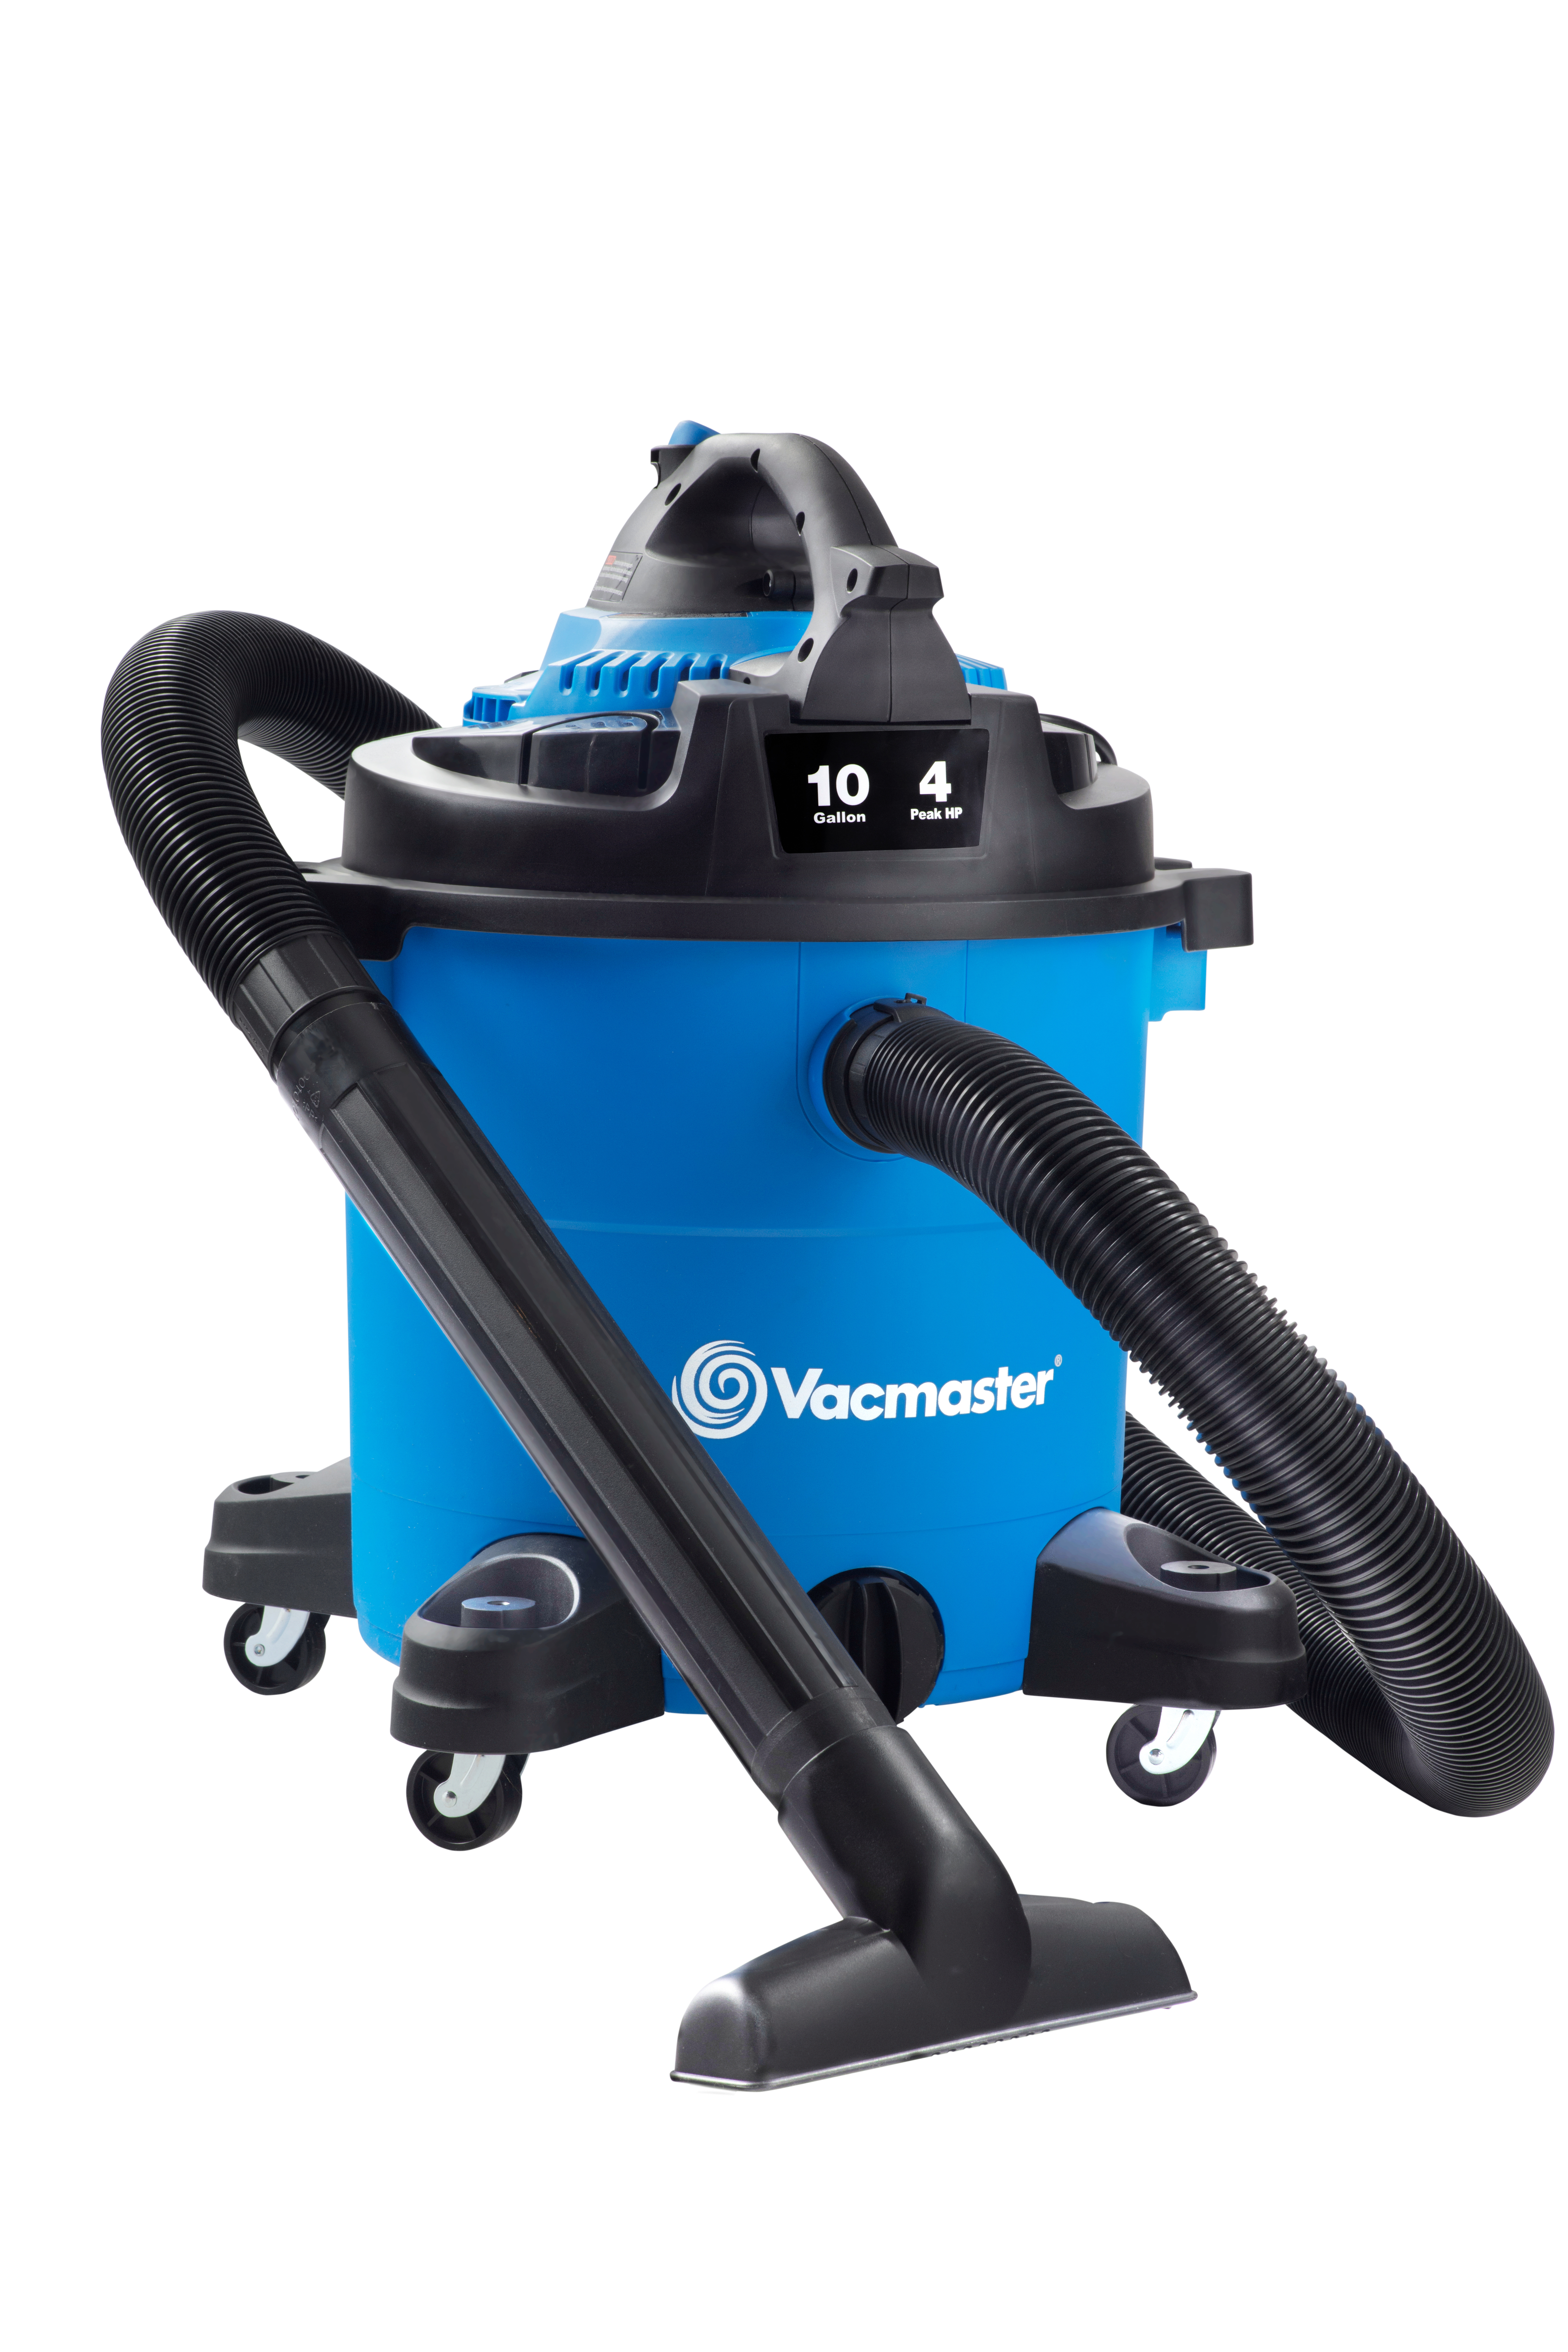 Shop Vac Contractor 10 Gallon Wet / Dry Vacuum